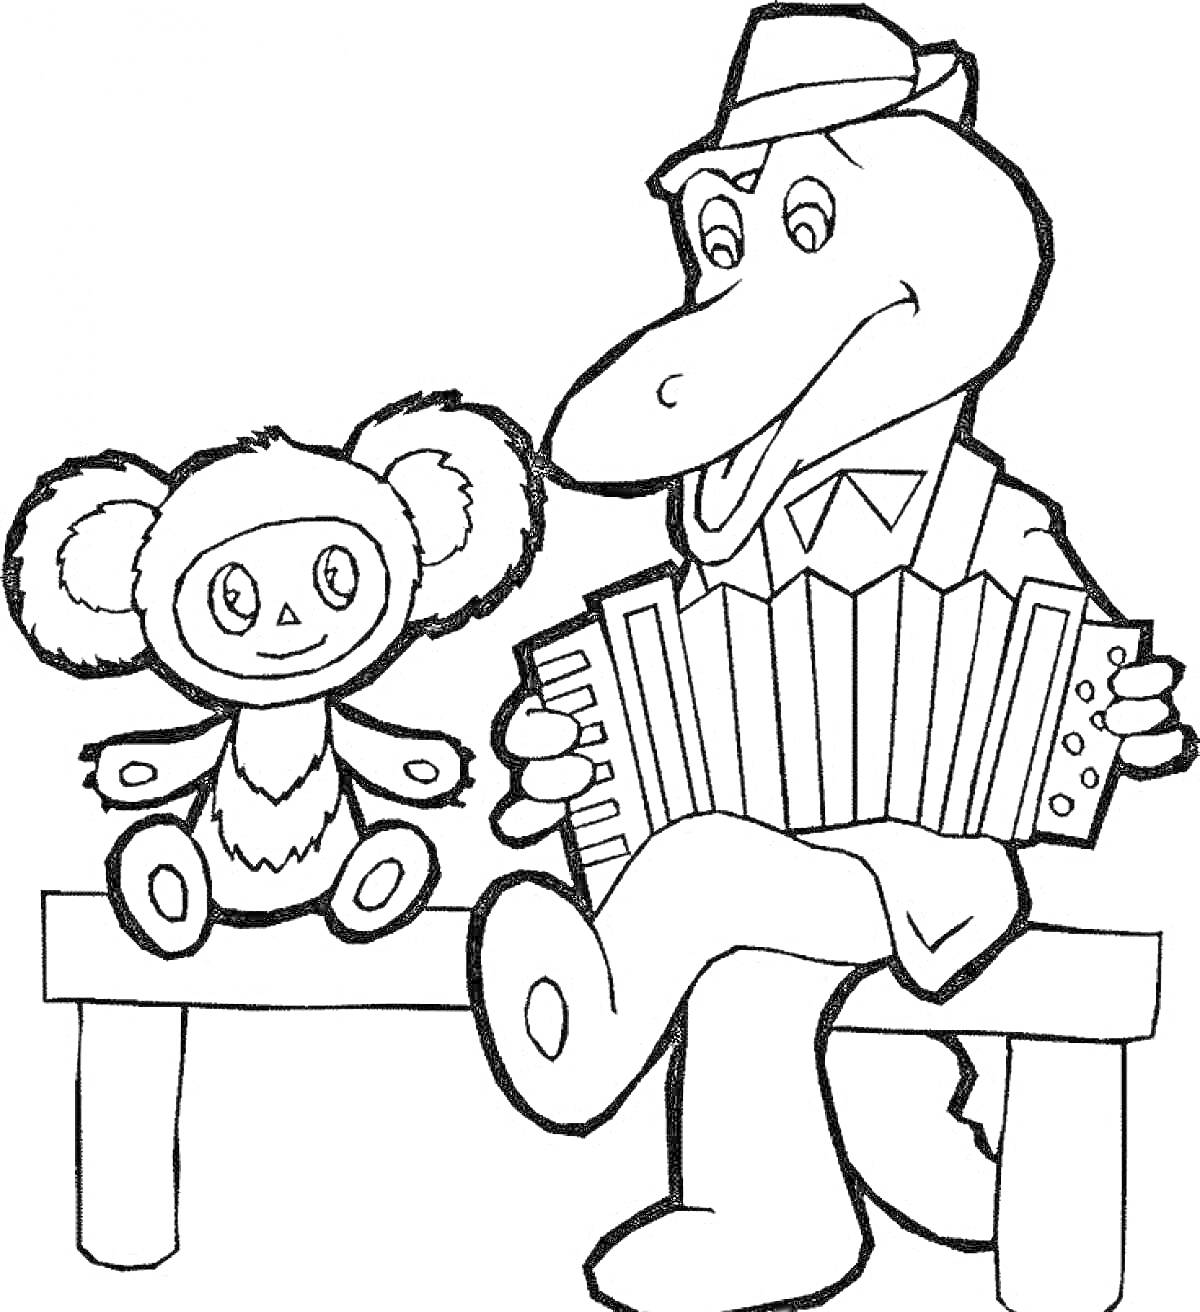 Раскраска Чебурашка и крокодил Гена на скамейке - Гена играет на аккордеоне, Чебурашка сидит рядом